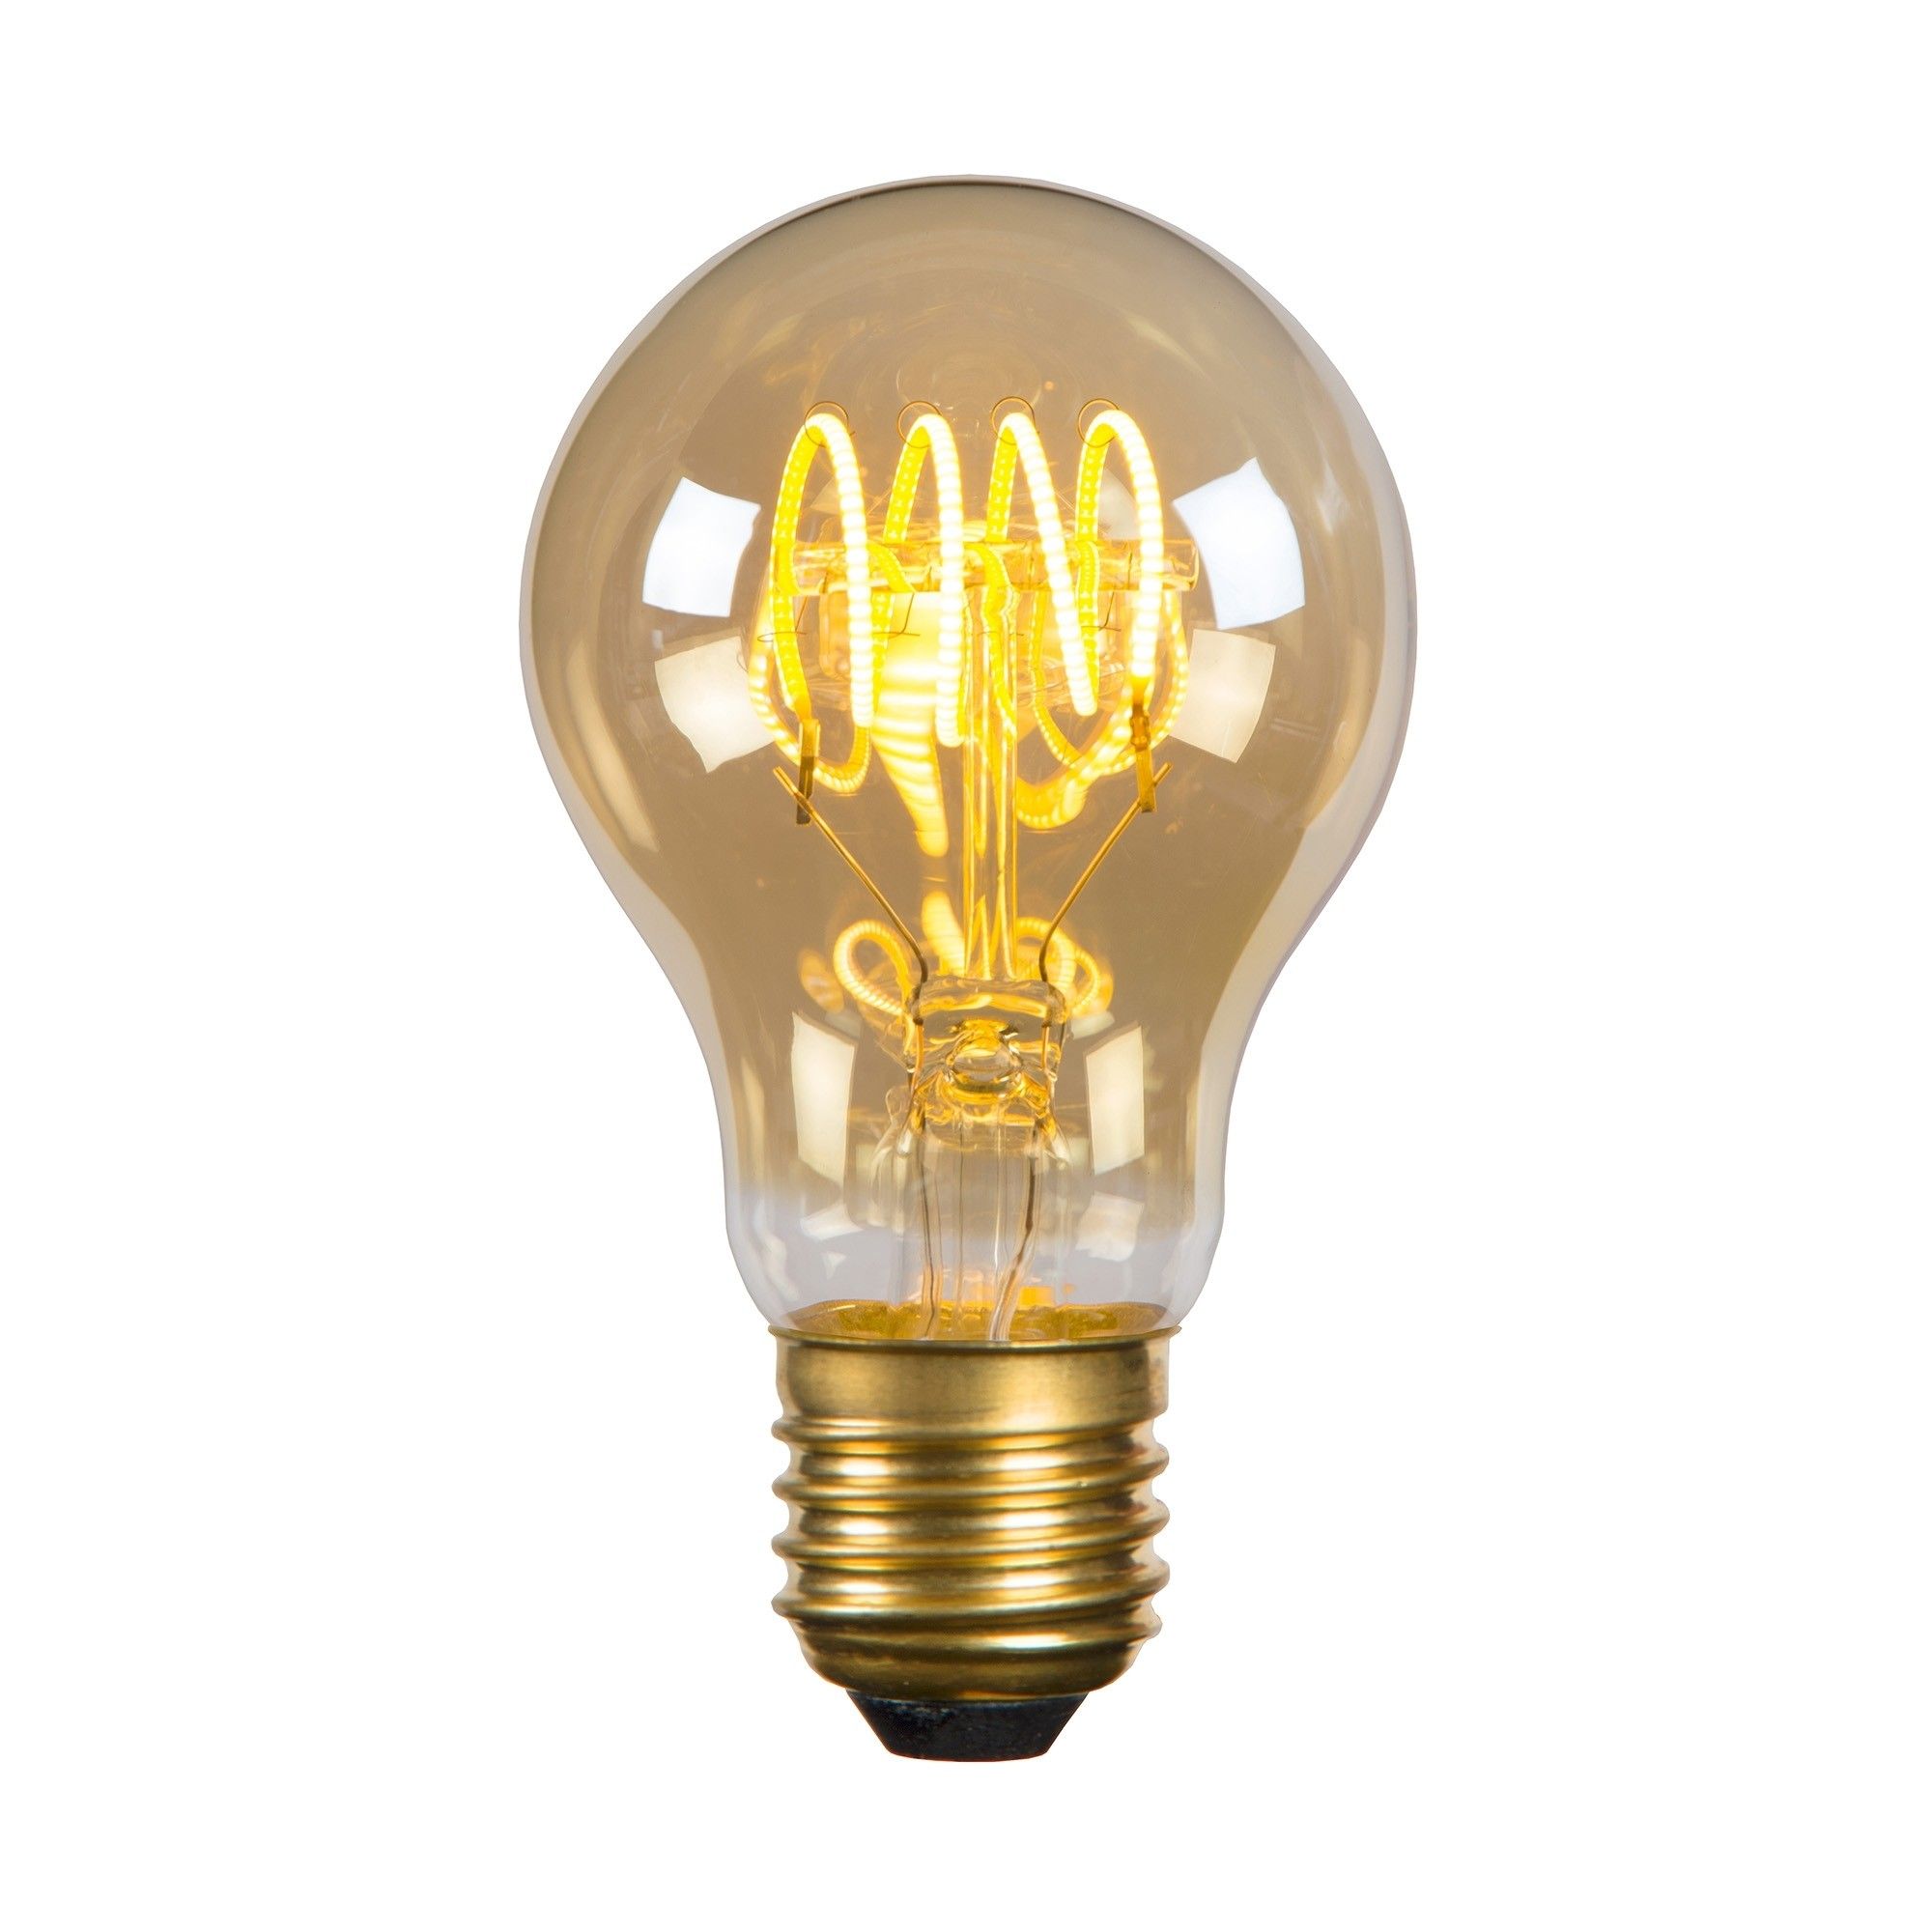 Oprichter Legende lood Lucide LED filament lamp - Ø 6 x 10,5 cm - E27 - 5W dimbaar - 2200K - amber  | Lichtkoning